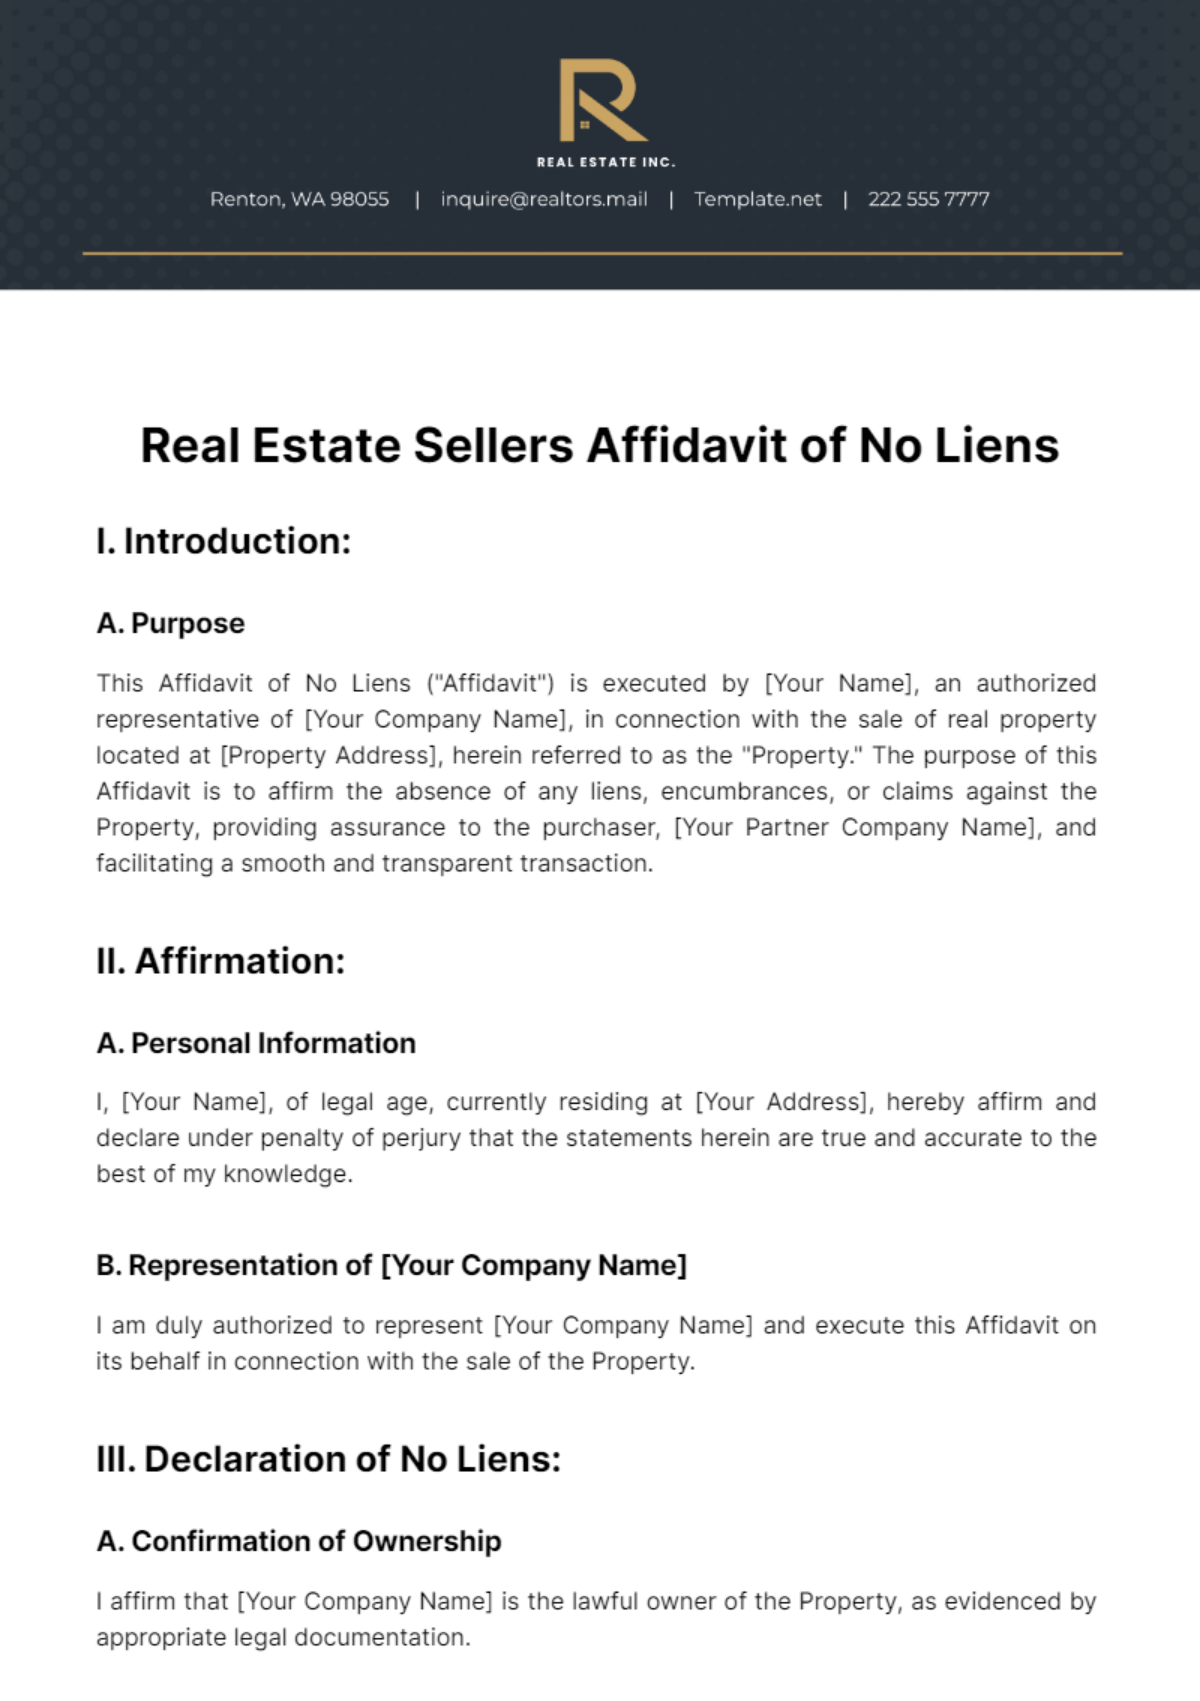 Real Estate Sellers Affidavit of No Liens Template